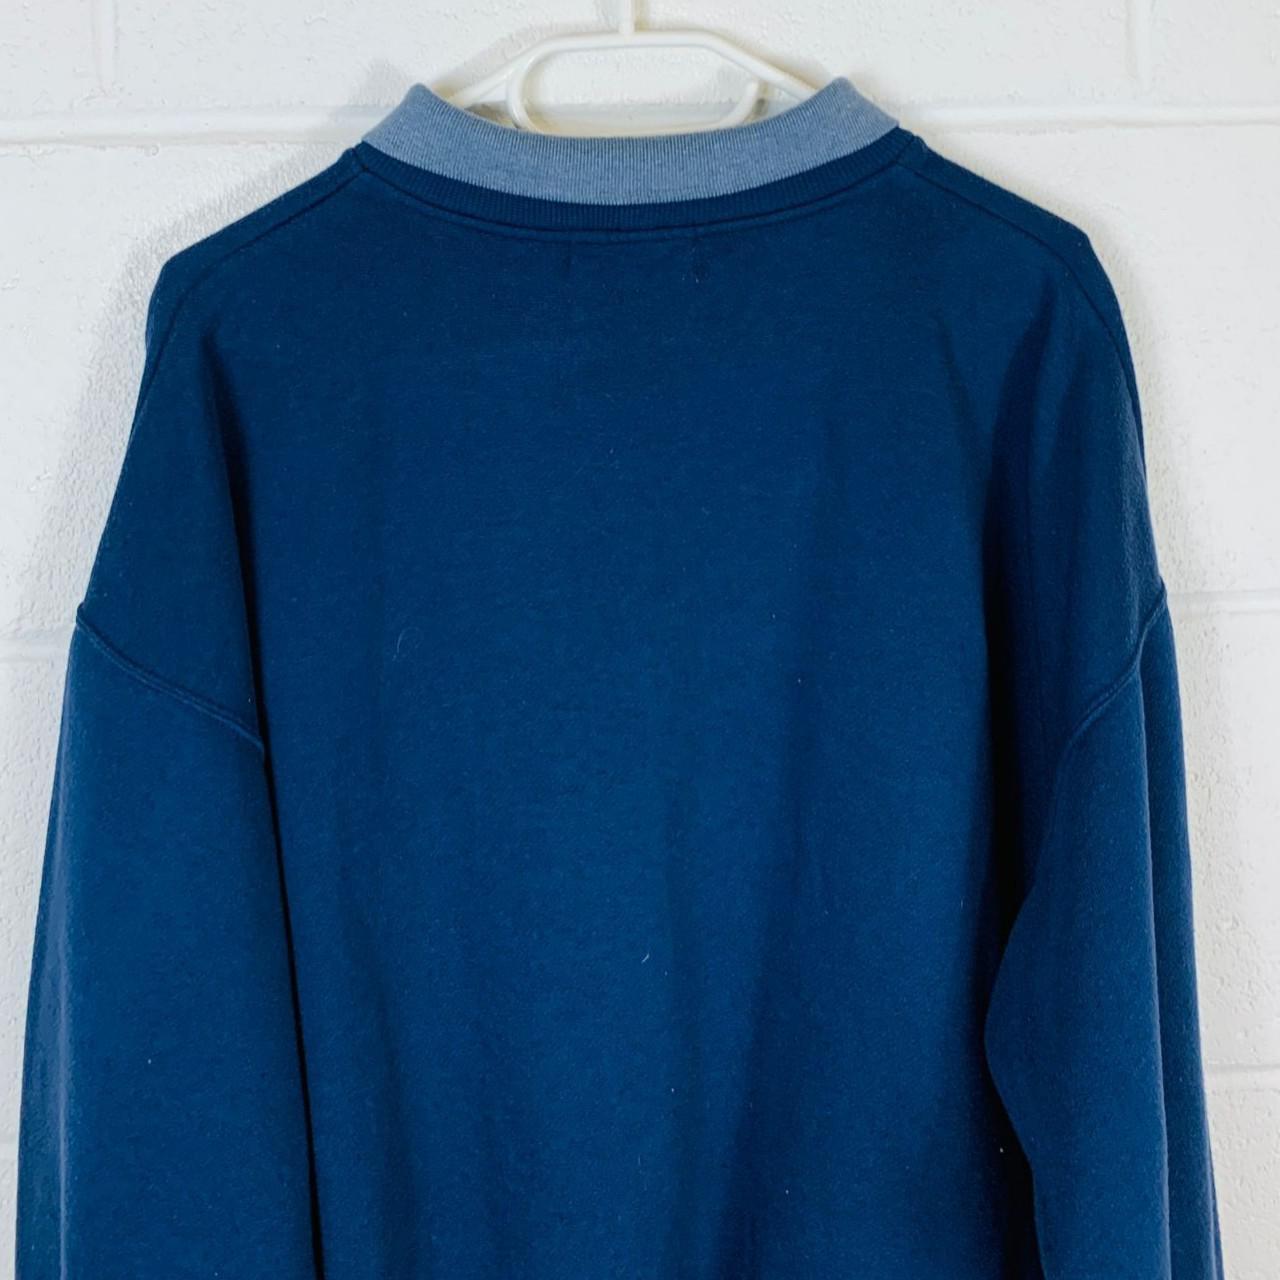 Women's Blue and Navy Sweatshirt (4)